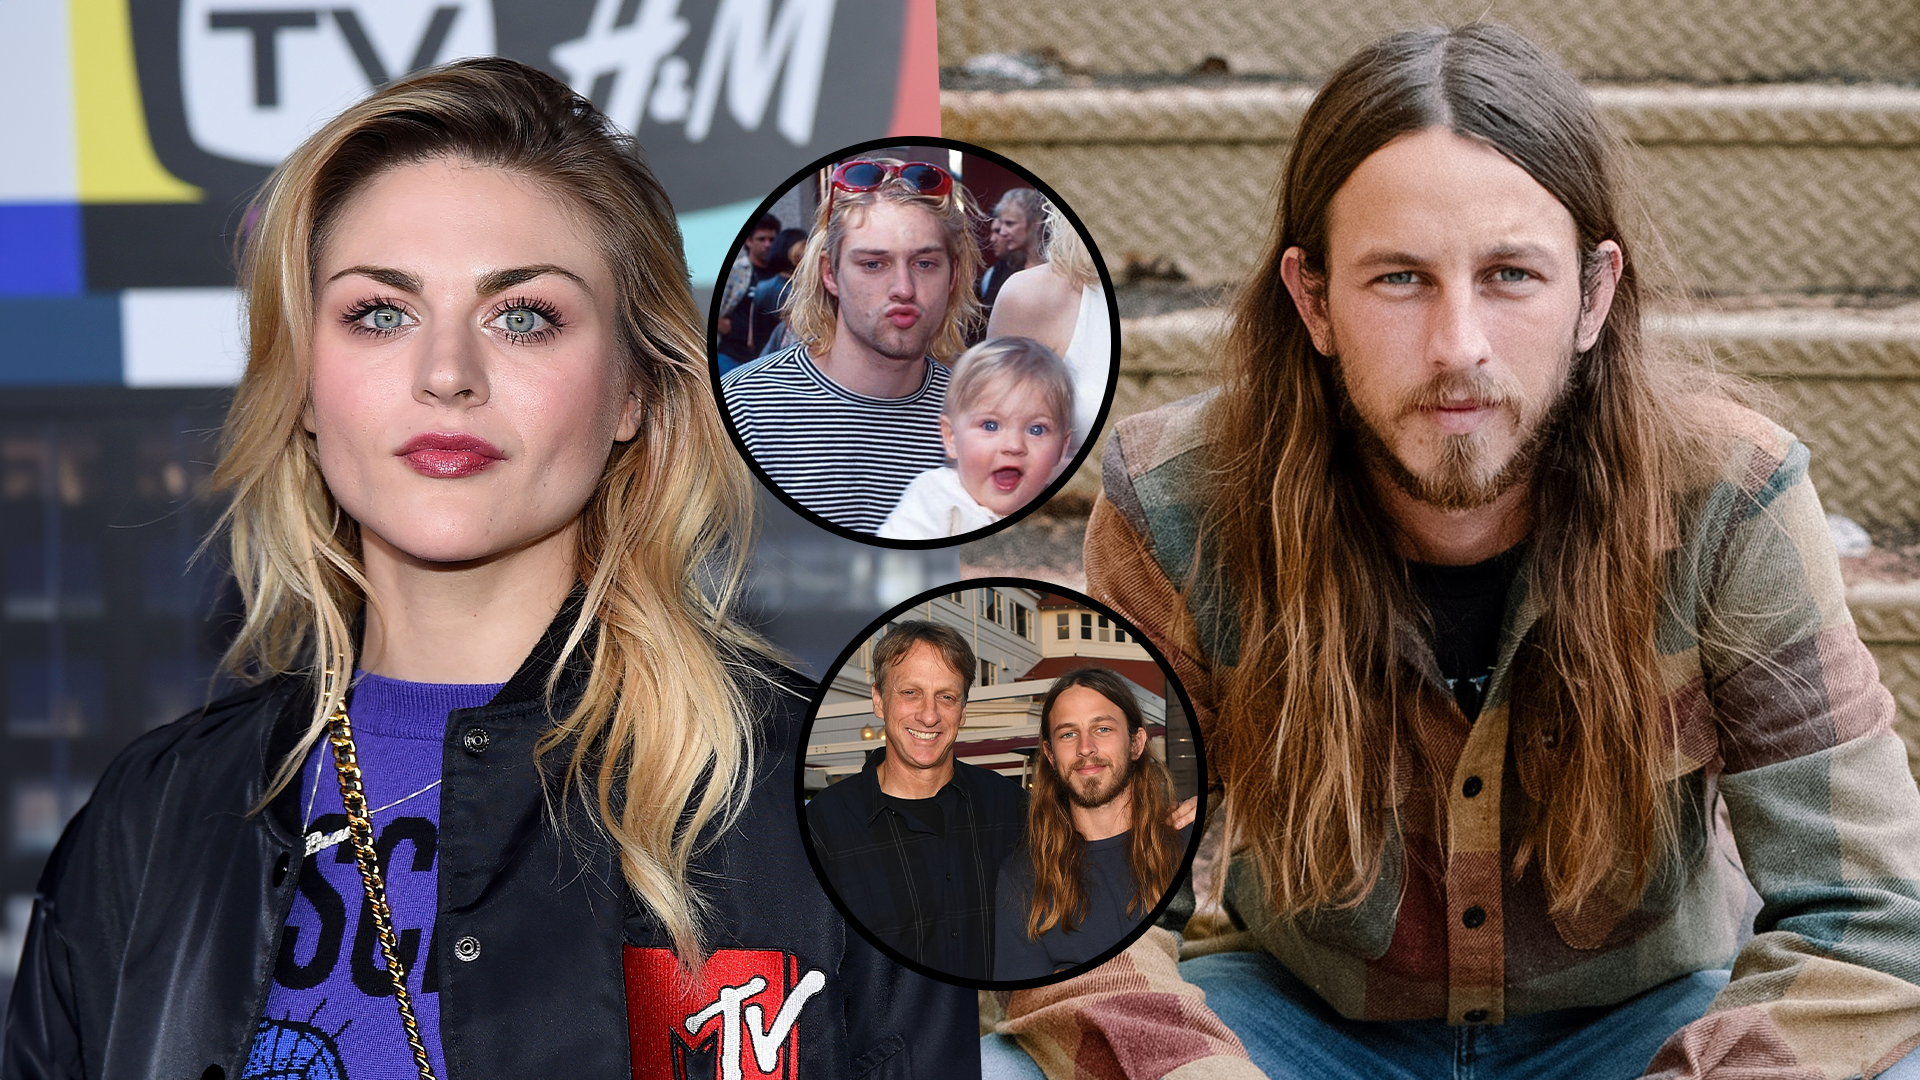 Kurt Cobain's daughter Frances marries Tony Hawk's son Riley